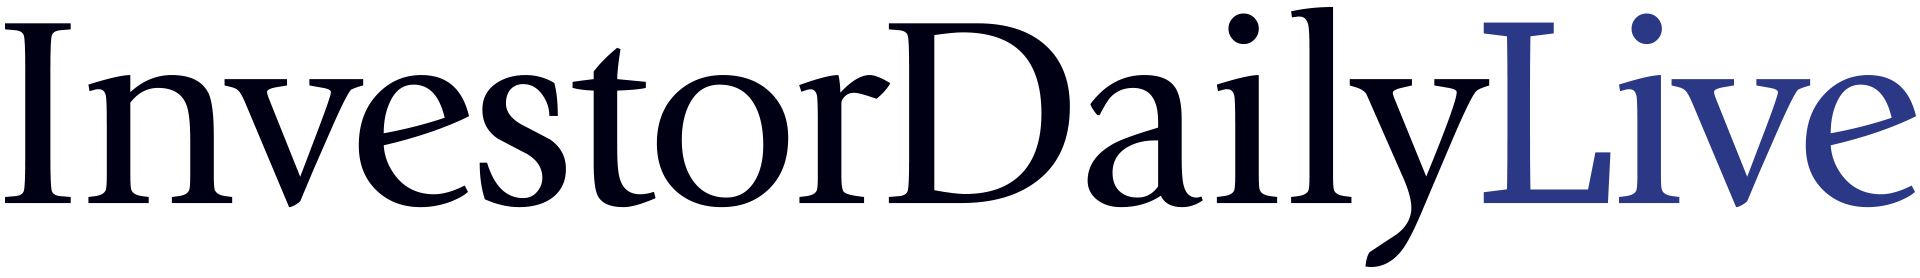 Investor Daily live logo